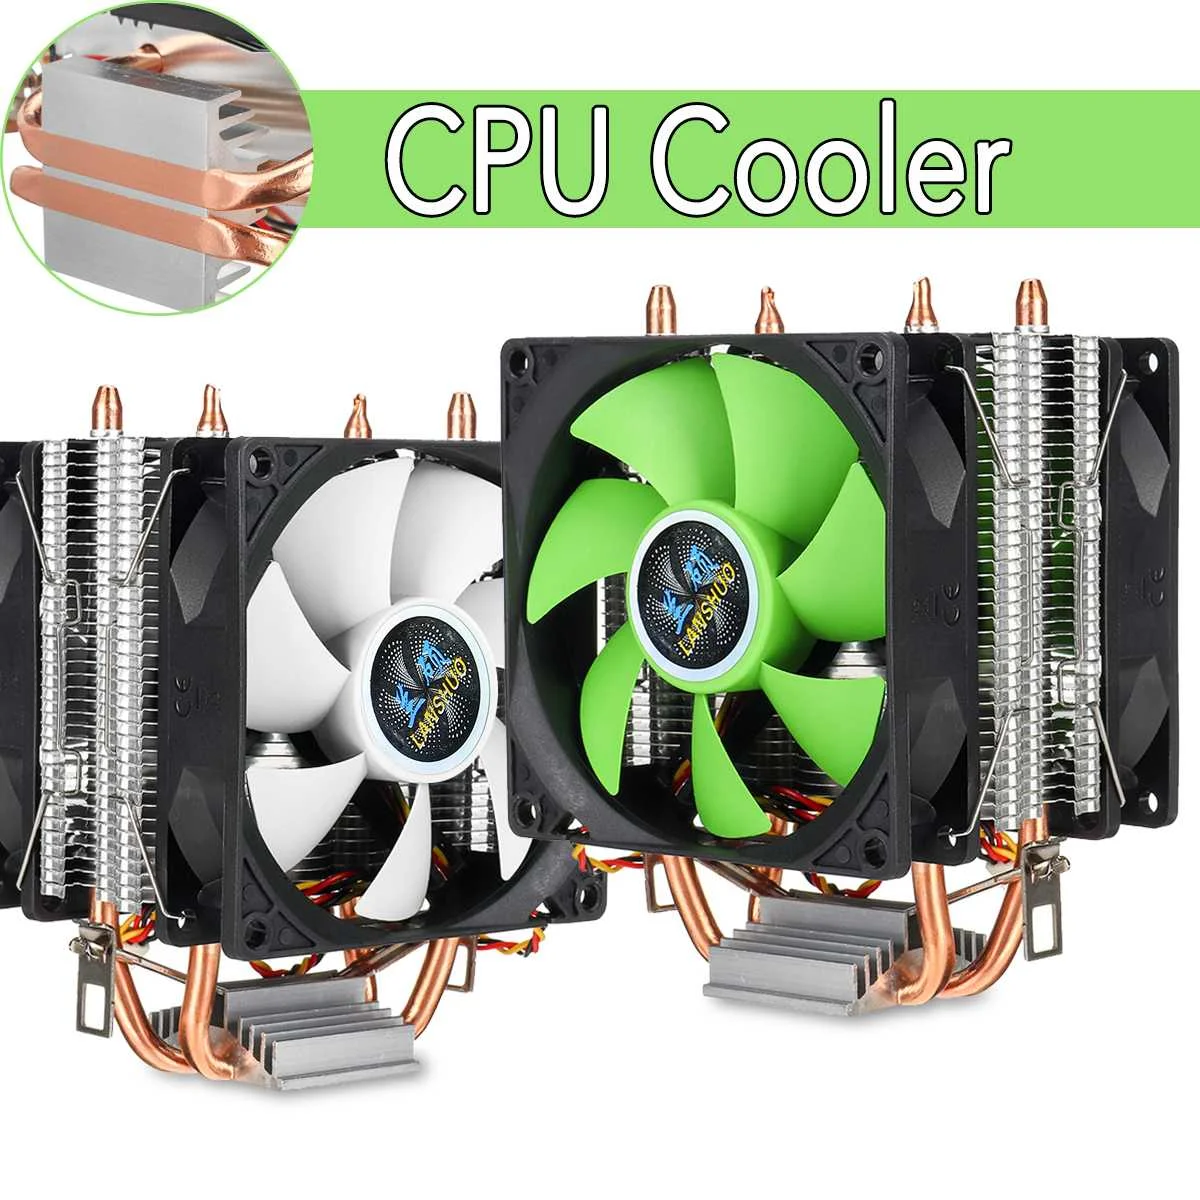 2 Heat Pipe LED Dual Fan CPU Cooler Heatsink for Intel LGA 1156 AMD AM2/2+/3/4 